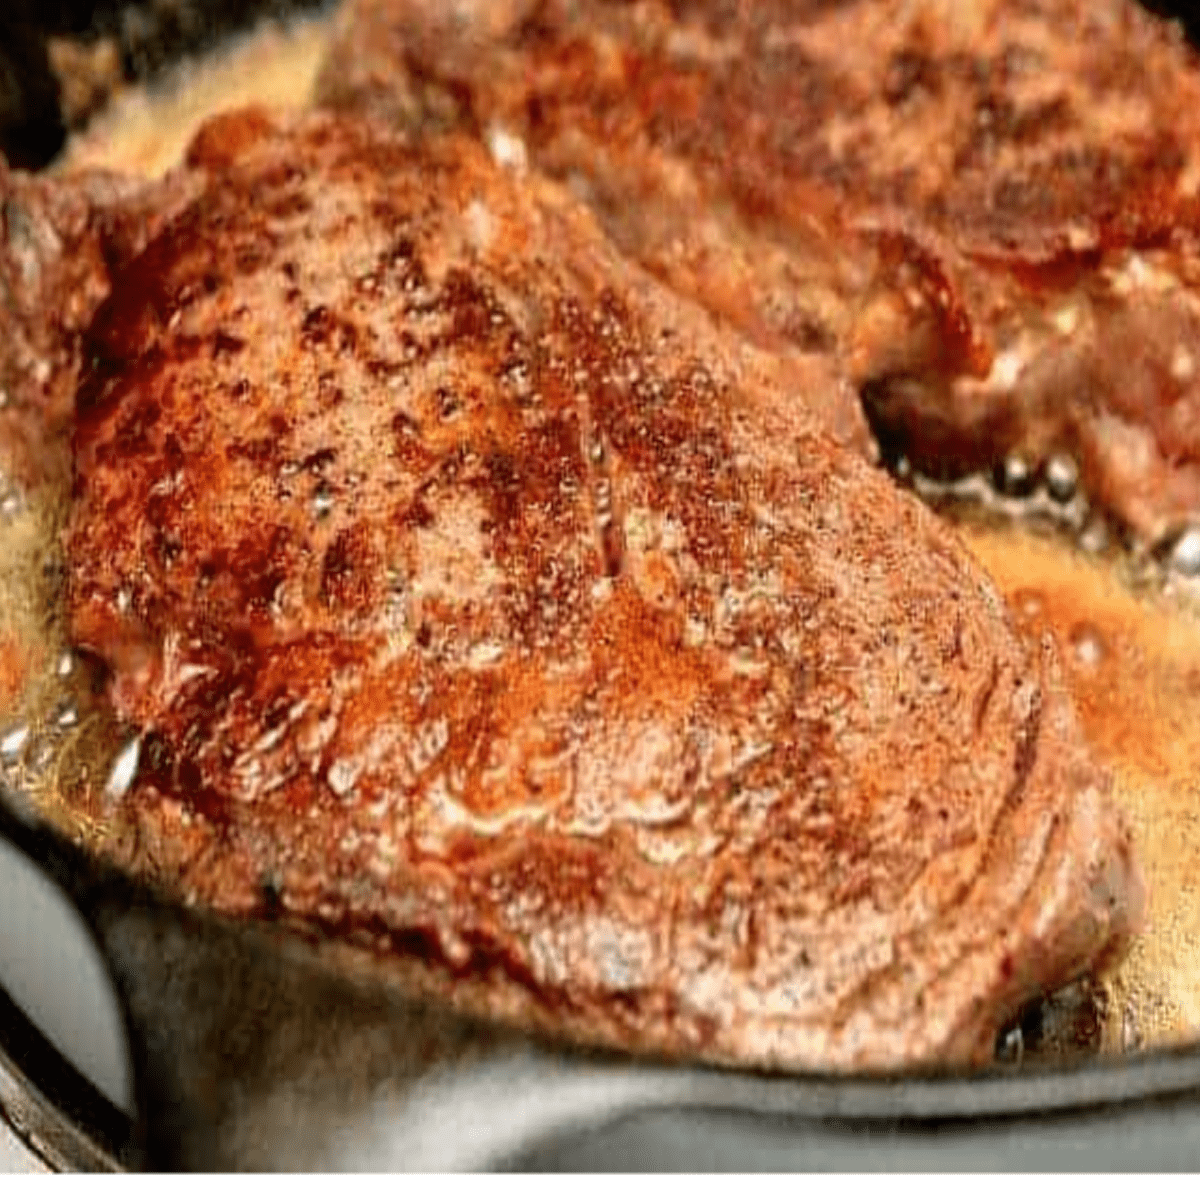 pan seared steak with au jus keto recipe.